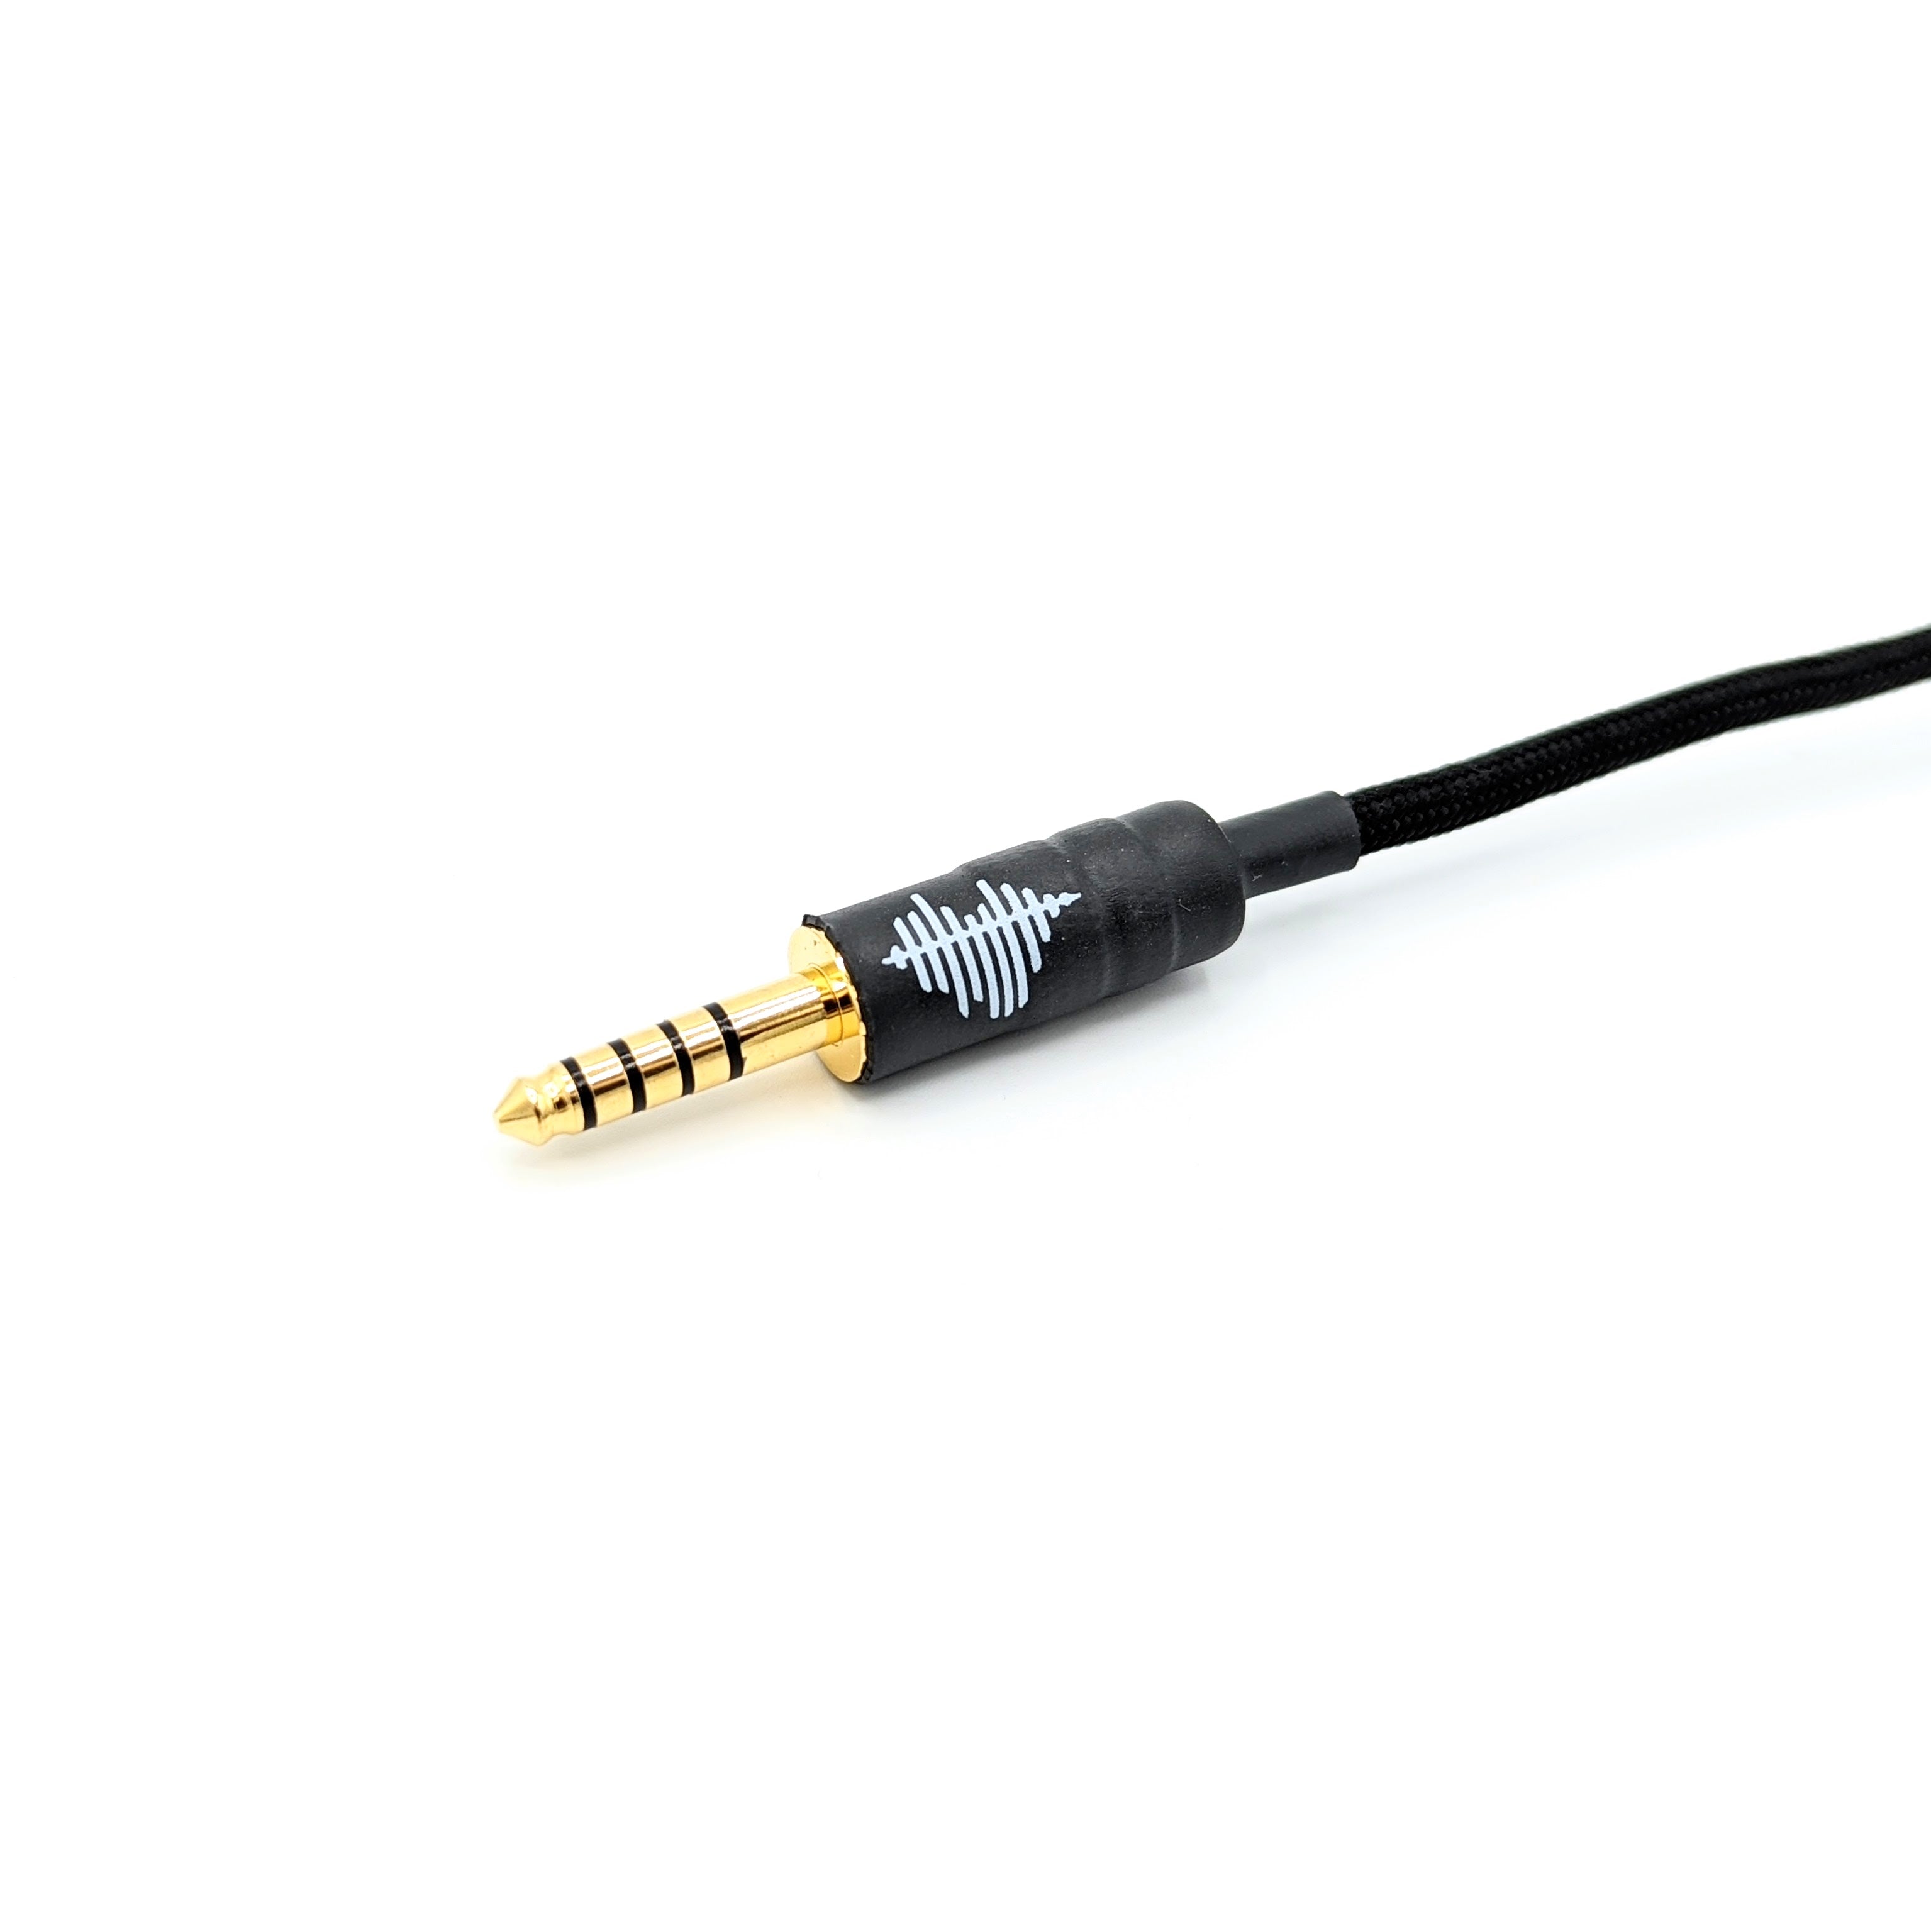 RPL-HC-9: Dual 3.5mm Cable for Hifiman, Focal, Meze 109 / Liric headhones + more